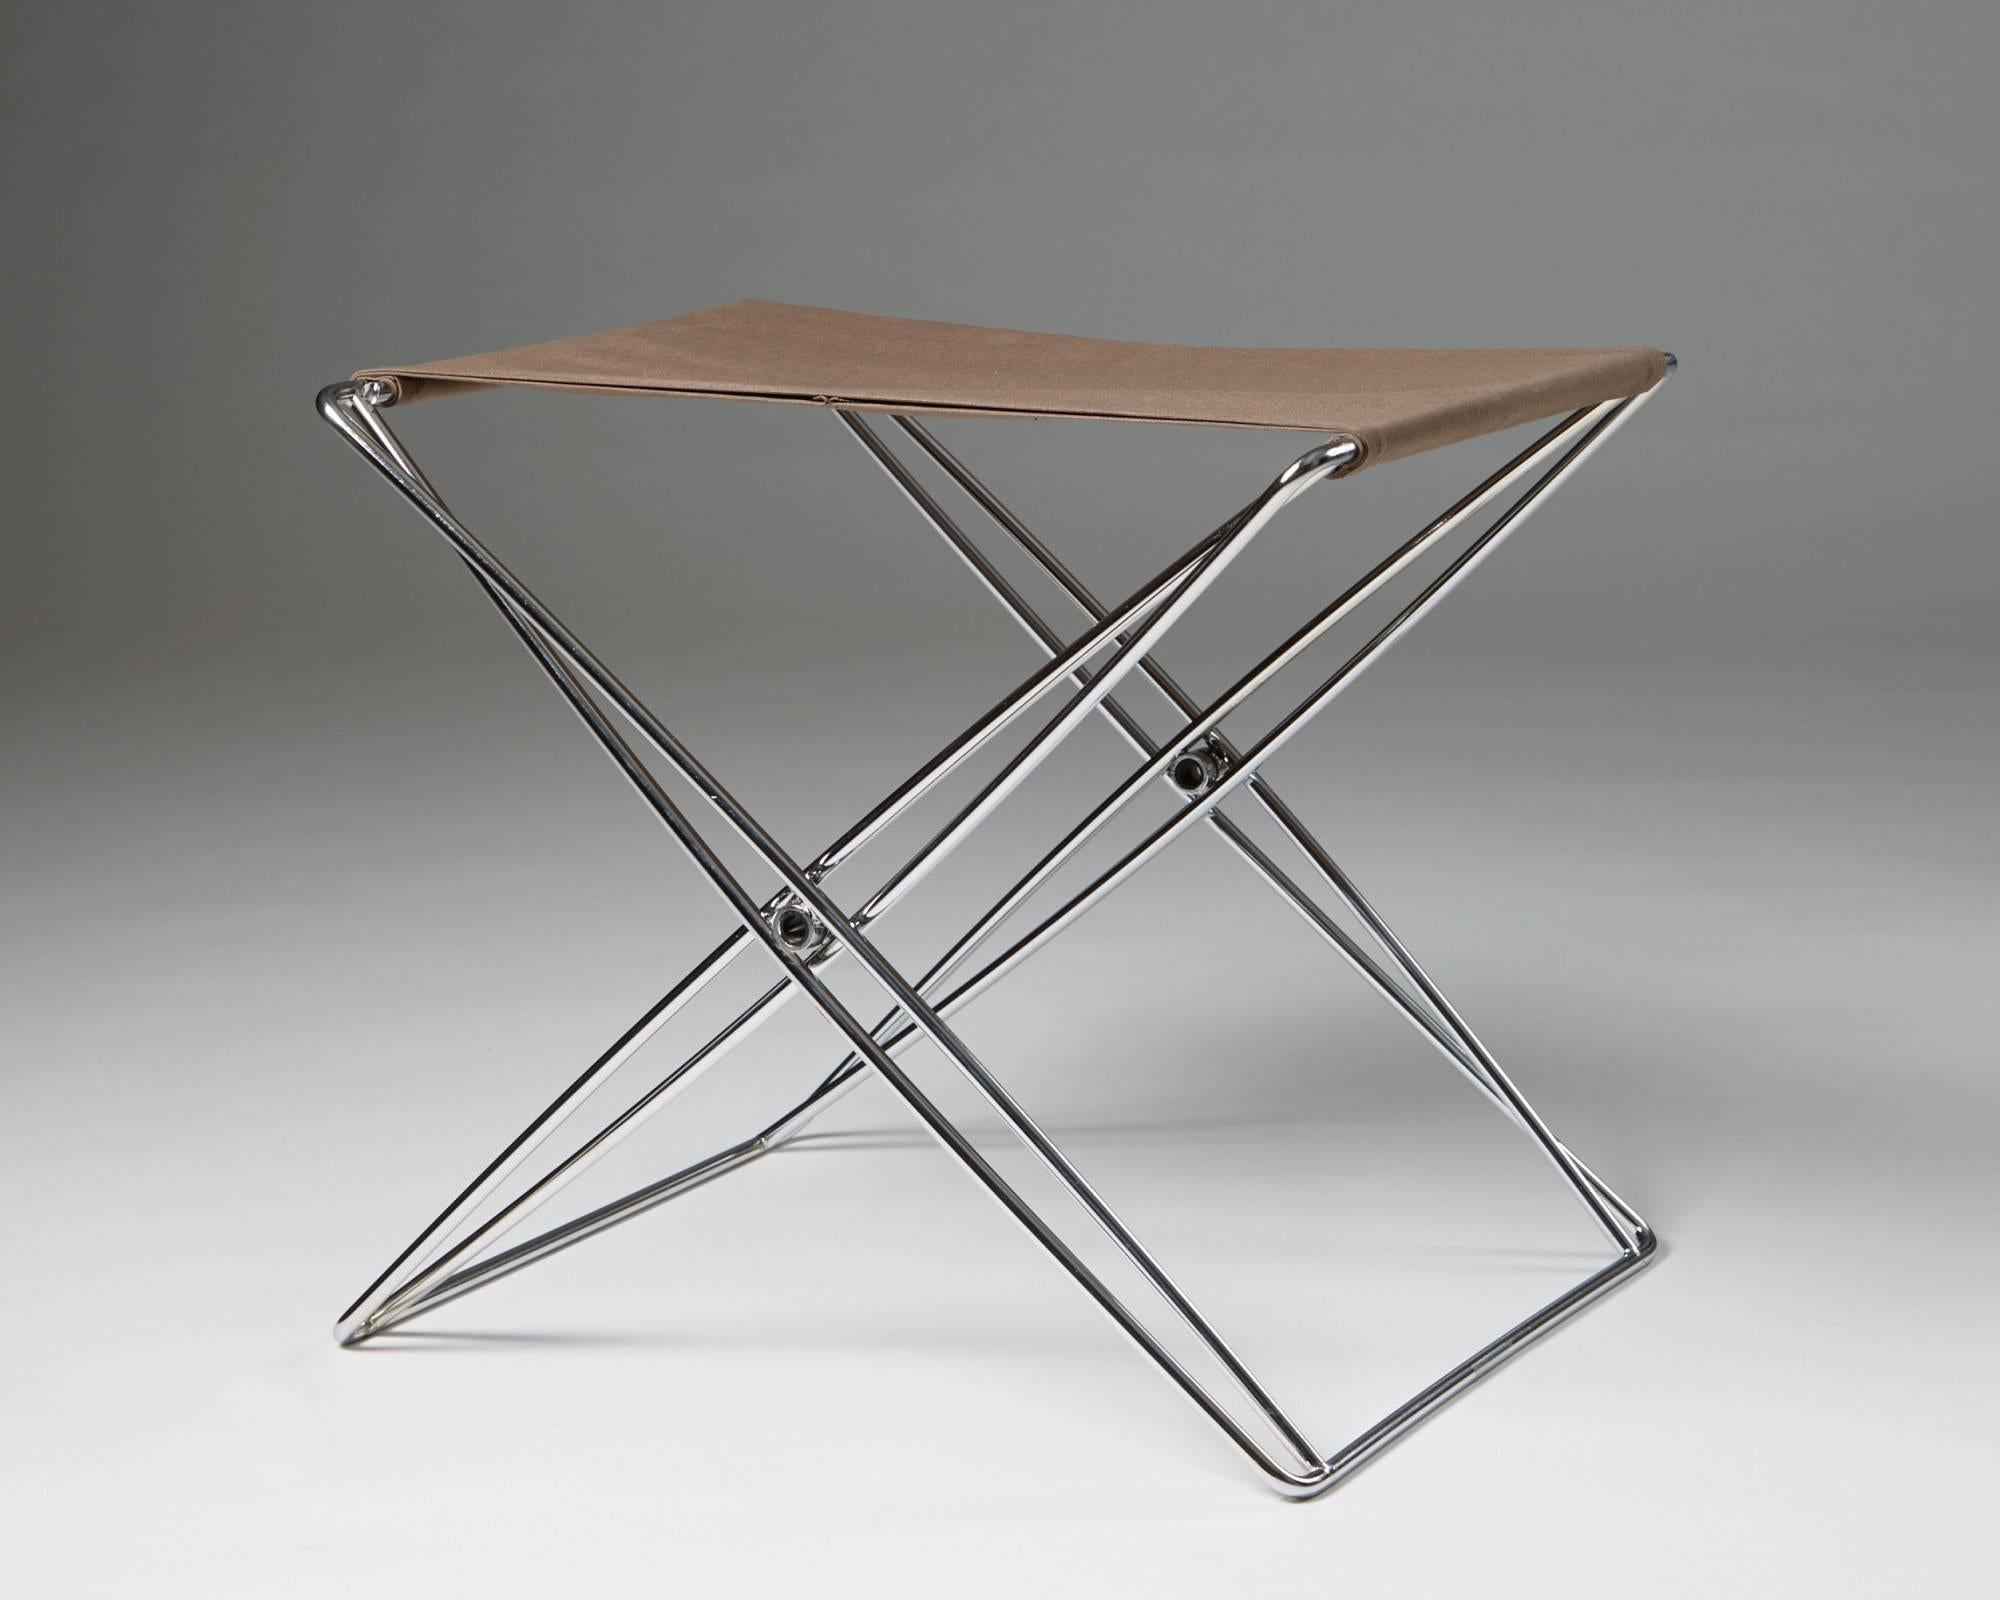 Folding stool designed by Jörgen Gammelgaard for Forum Design, Denmark, 1970. Canvas and chromed steel.

Measures: H 41 cm/ 16